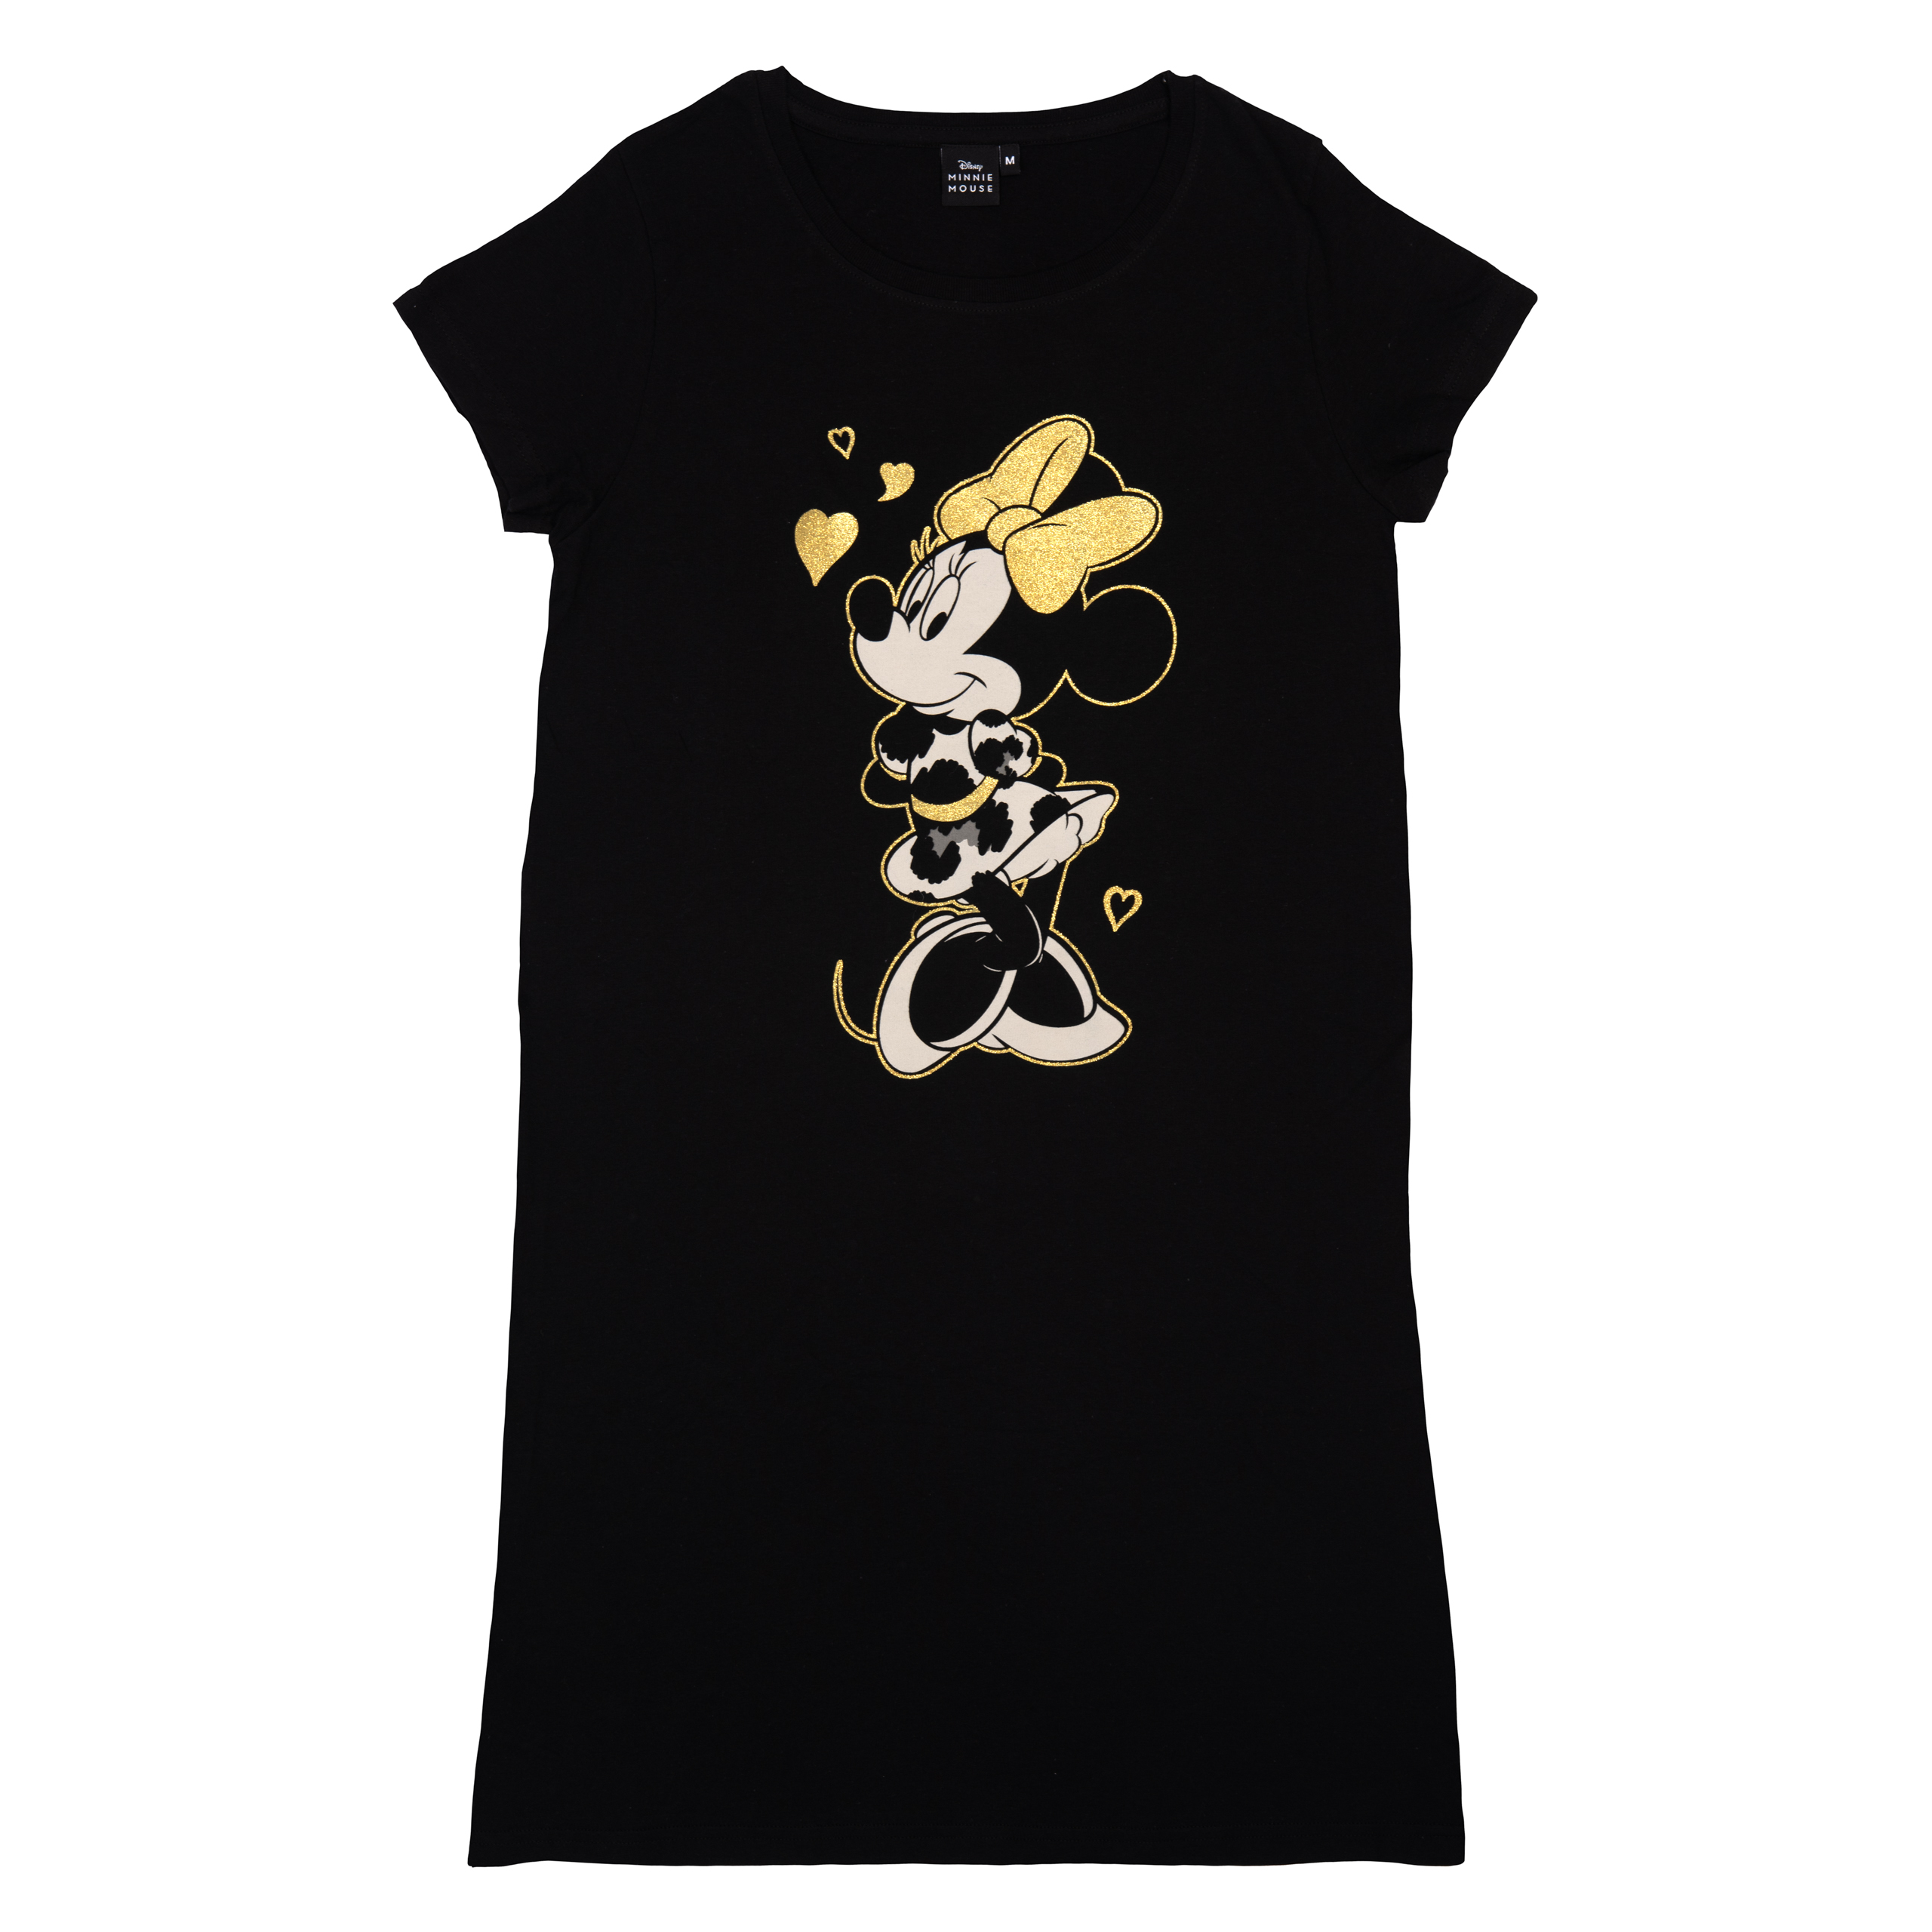 Disney Minnie Mouse T-Shirt für Damen - Oberteil Frauen Shirt Bigshirt  Oversize Top Schwarz 